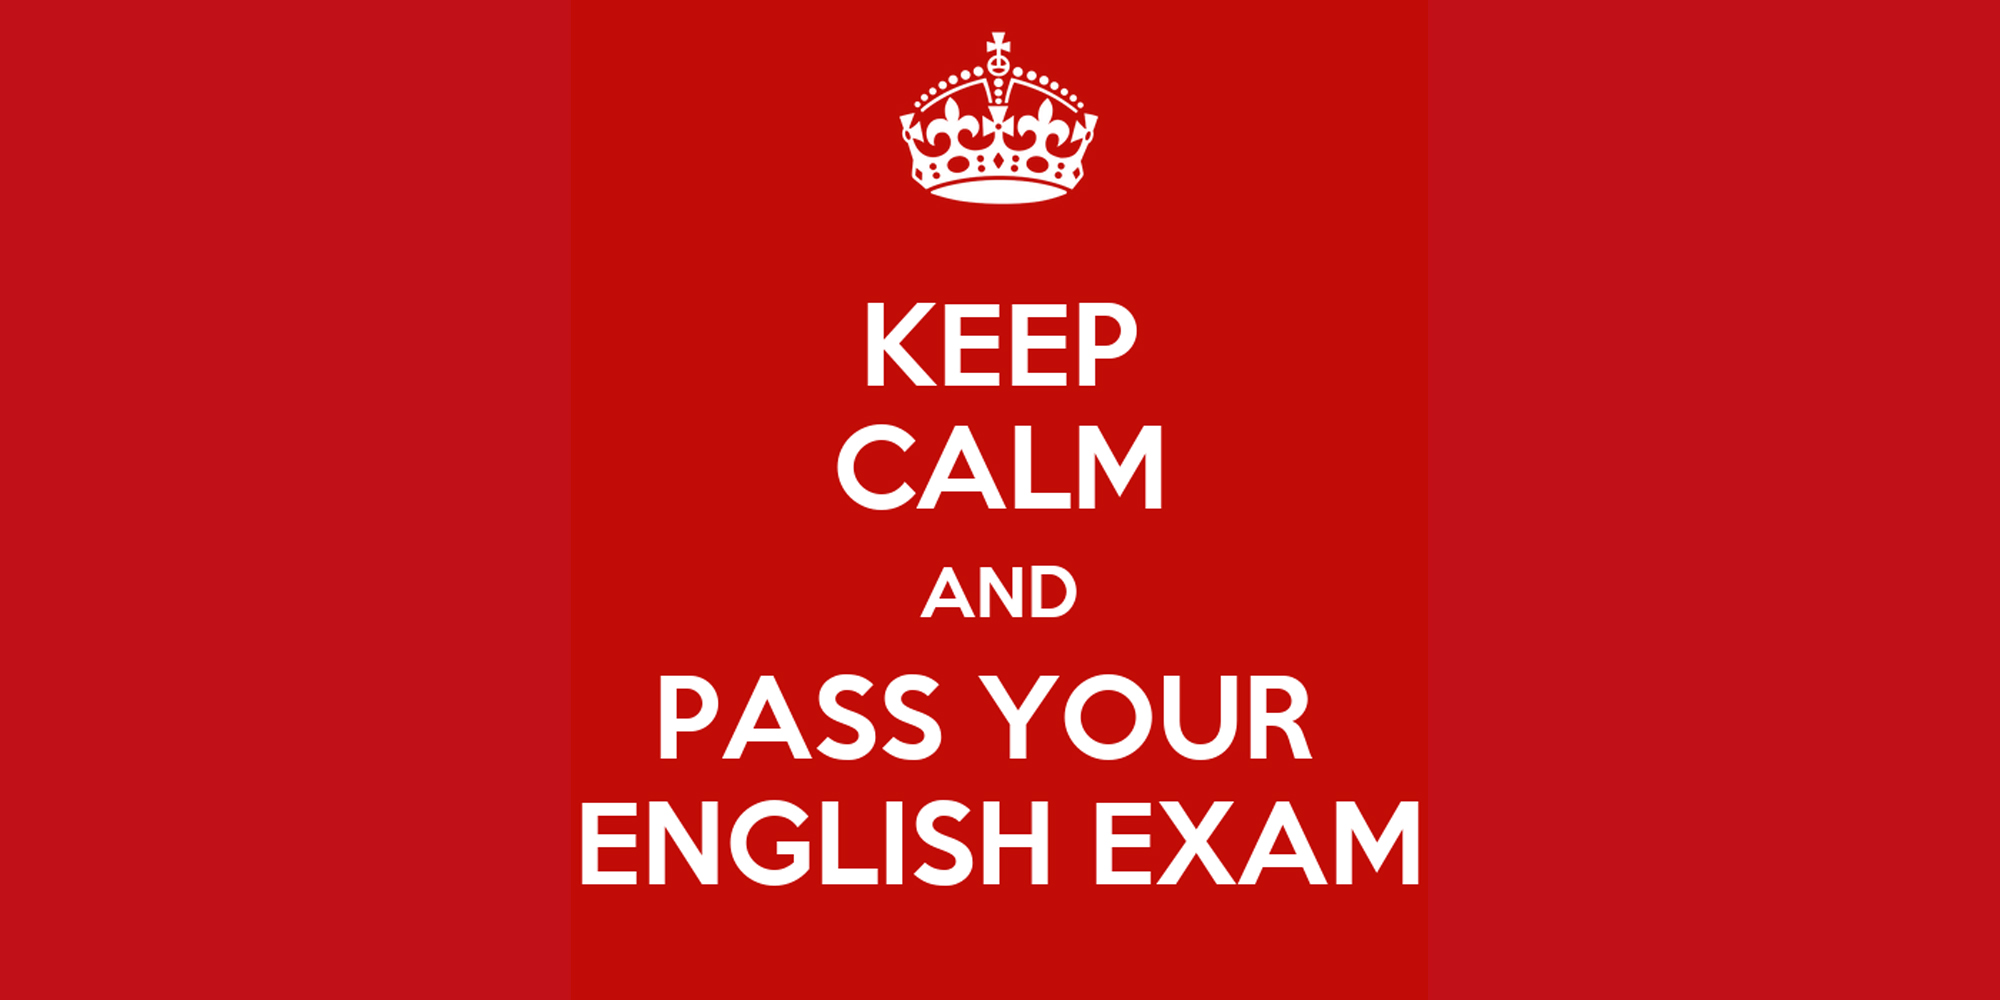 English Exam Instructions